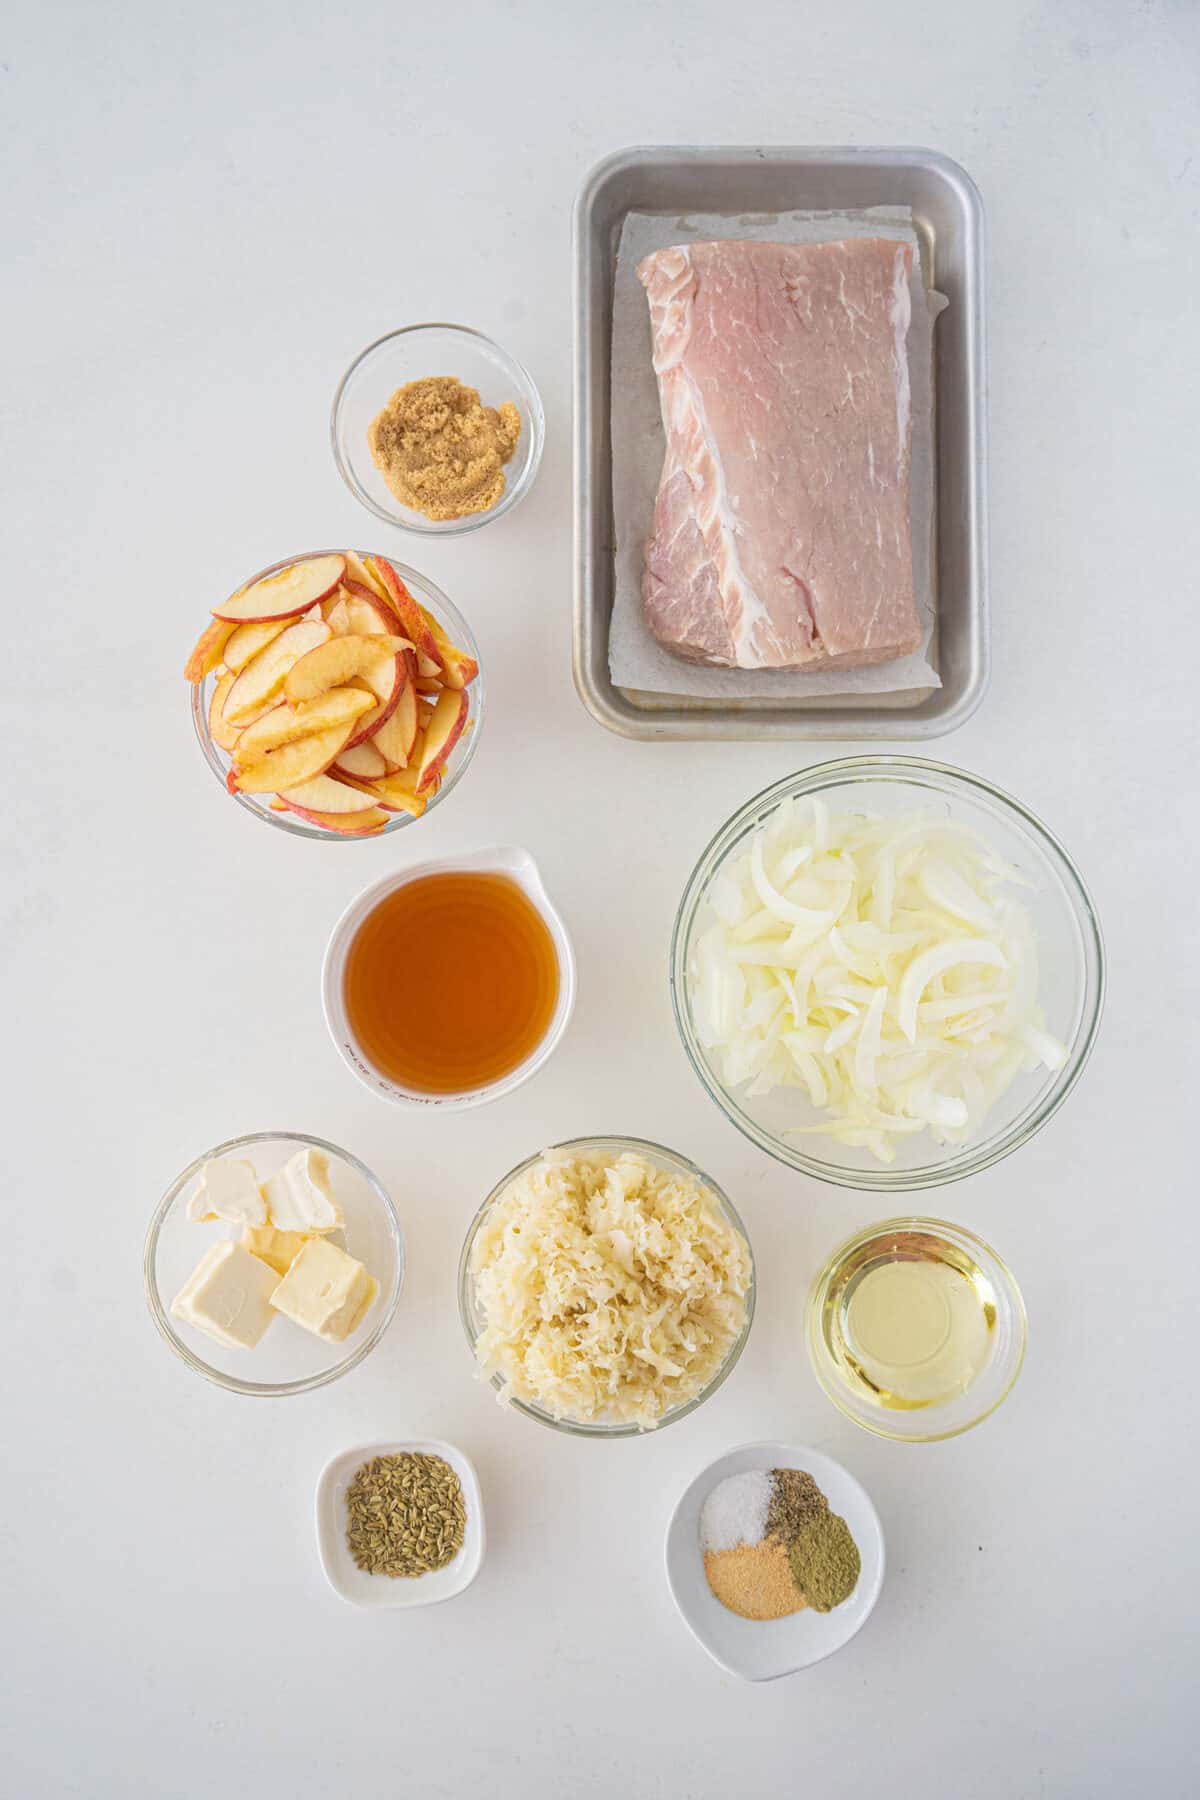 ingredients for pork and sauekraut